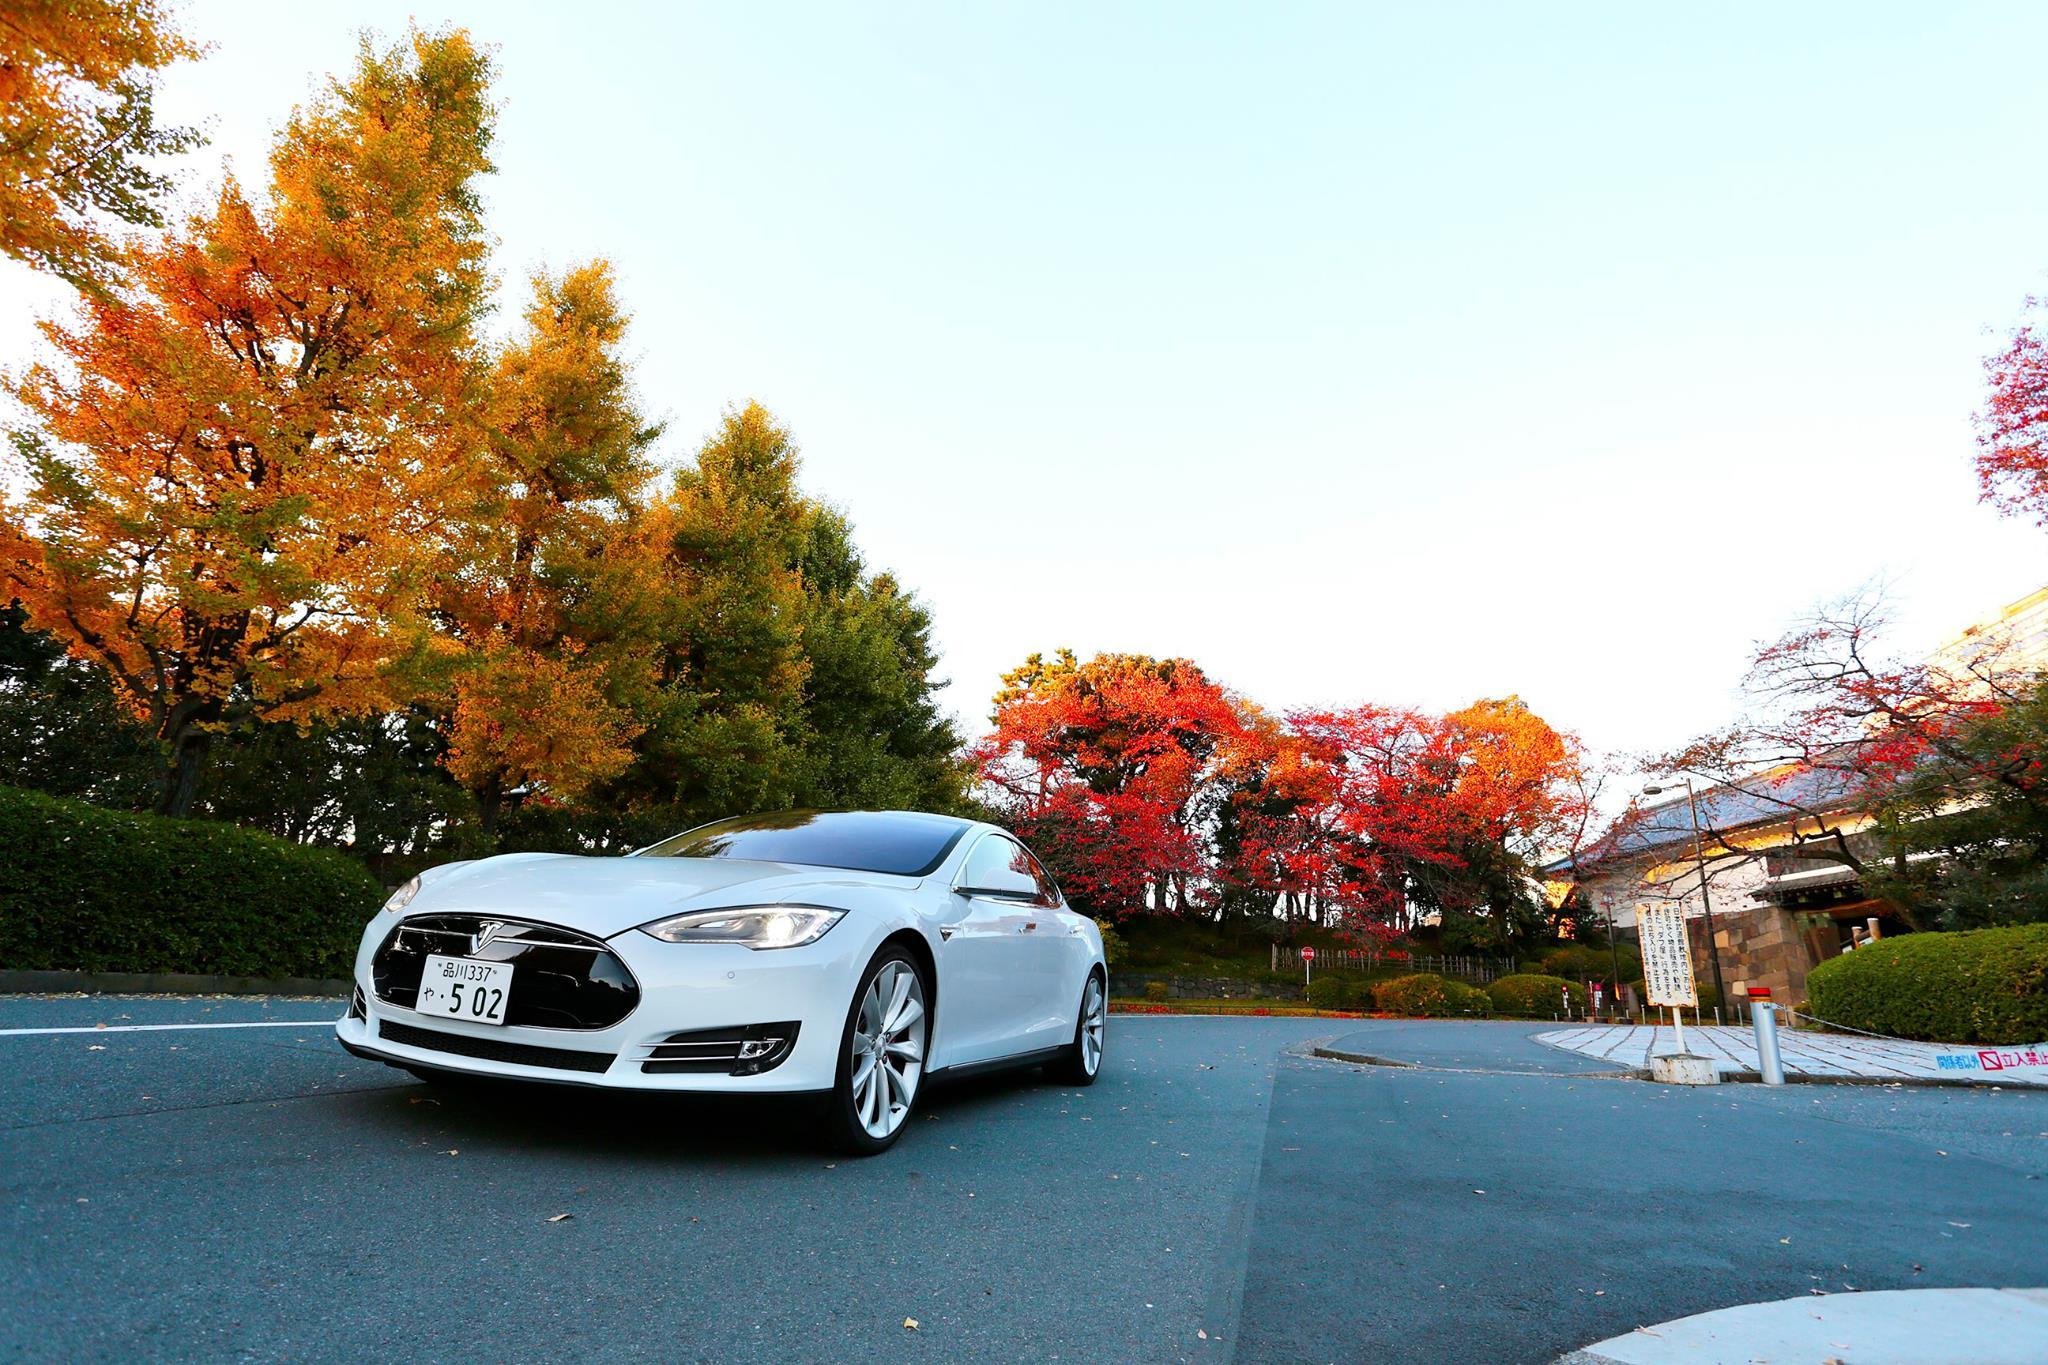 Wallpaper Wednesday: Tesla Model S Enjoys Autumn In Japan